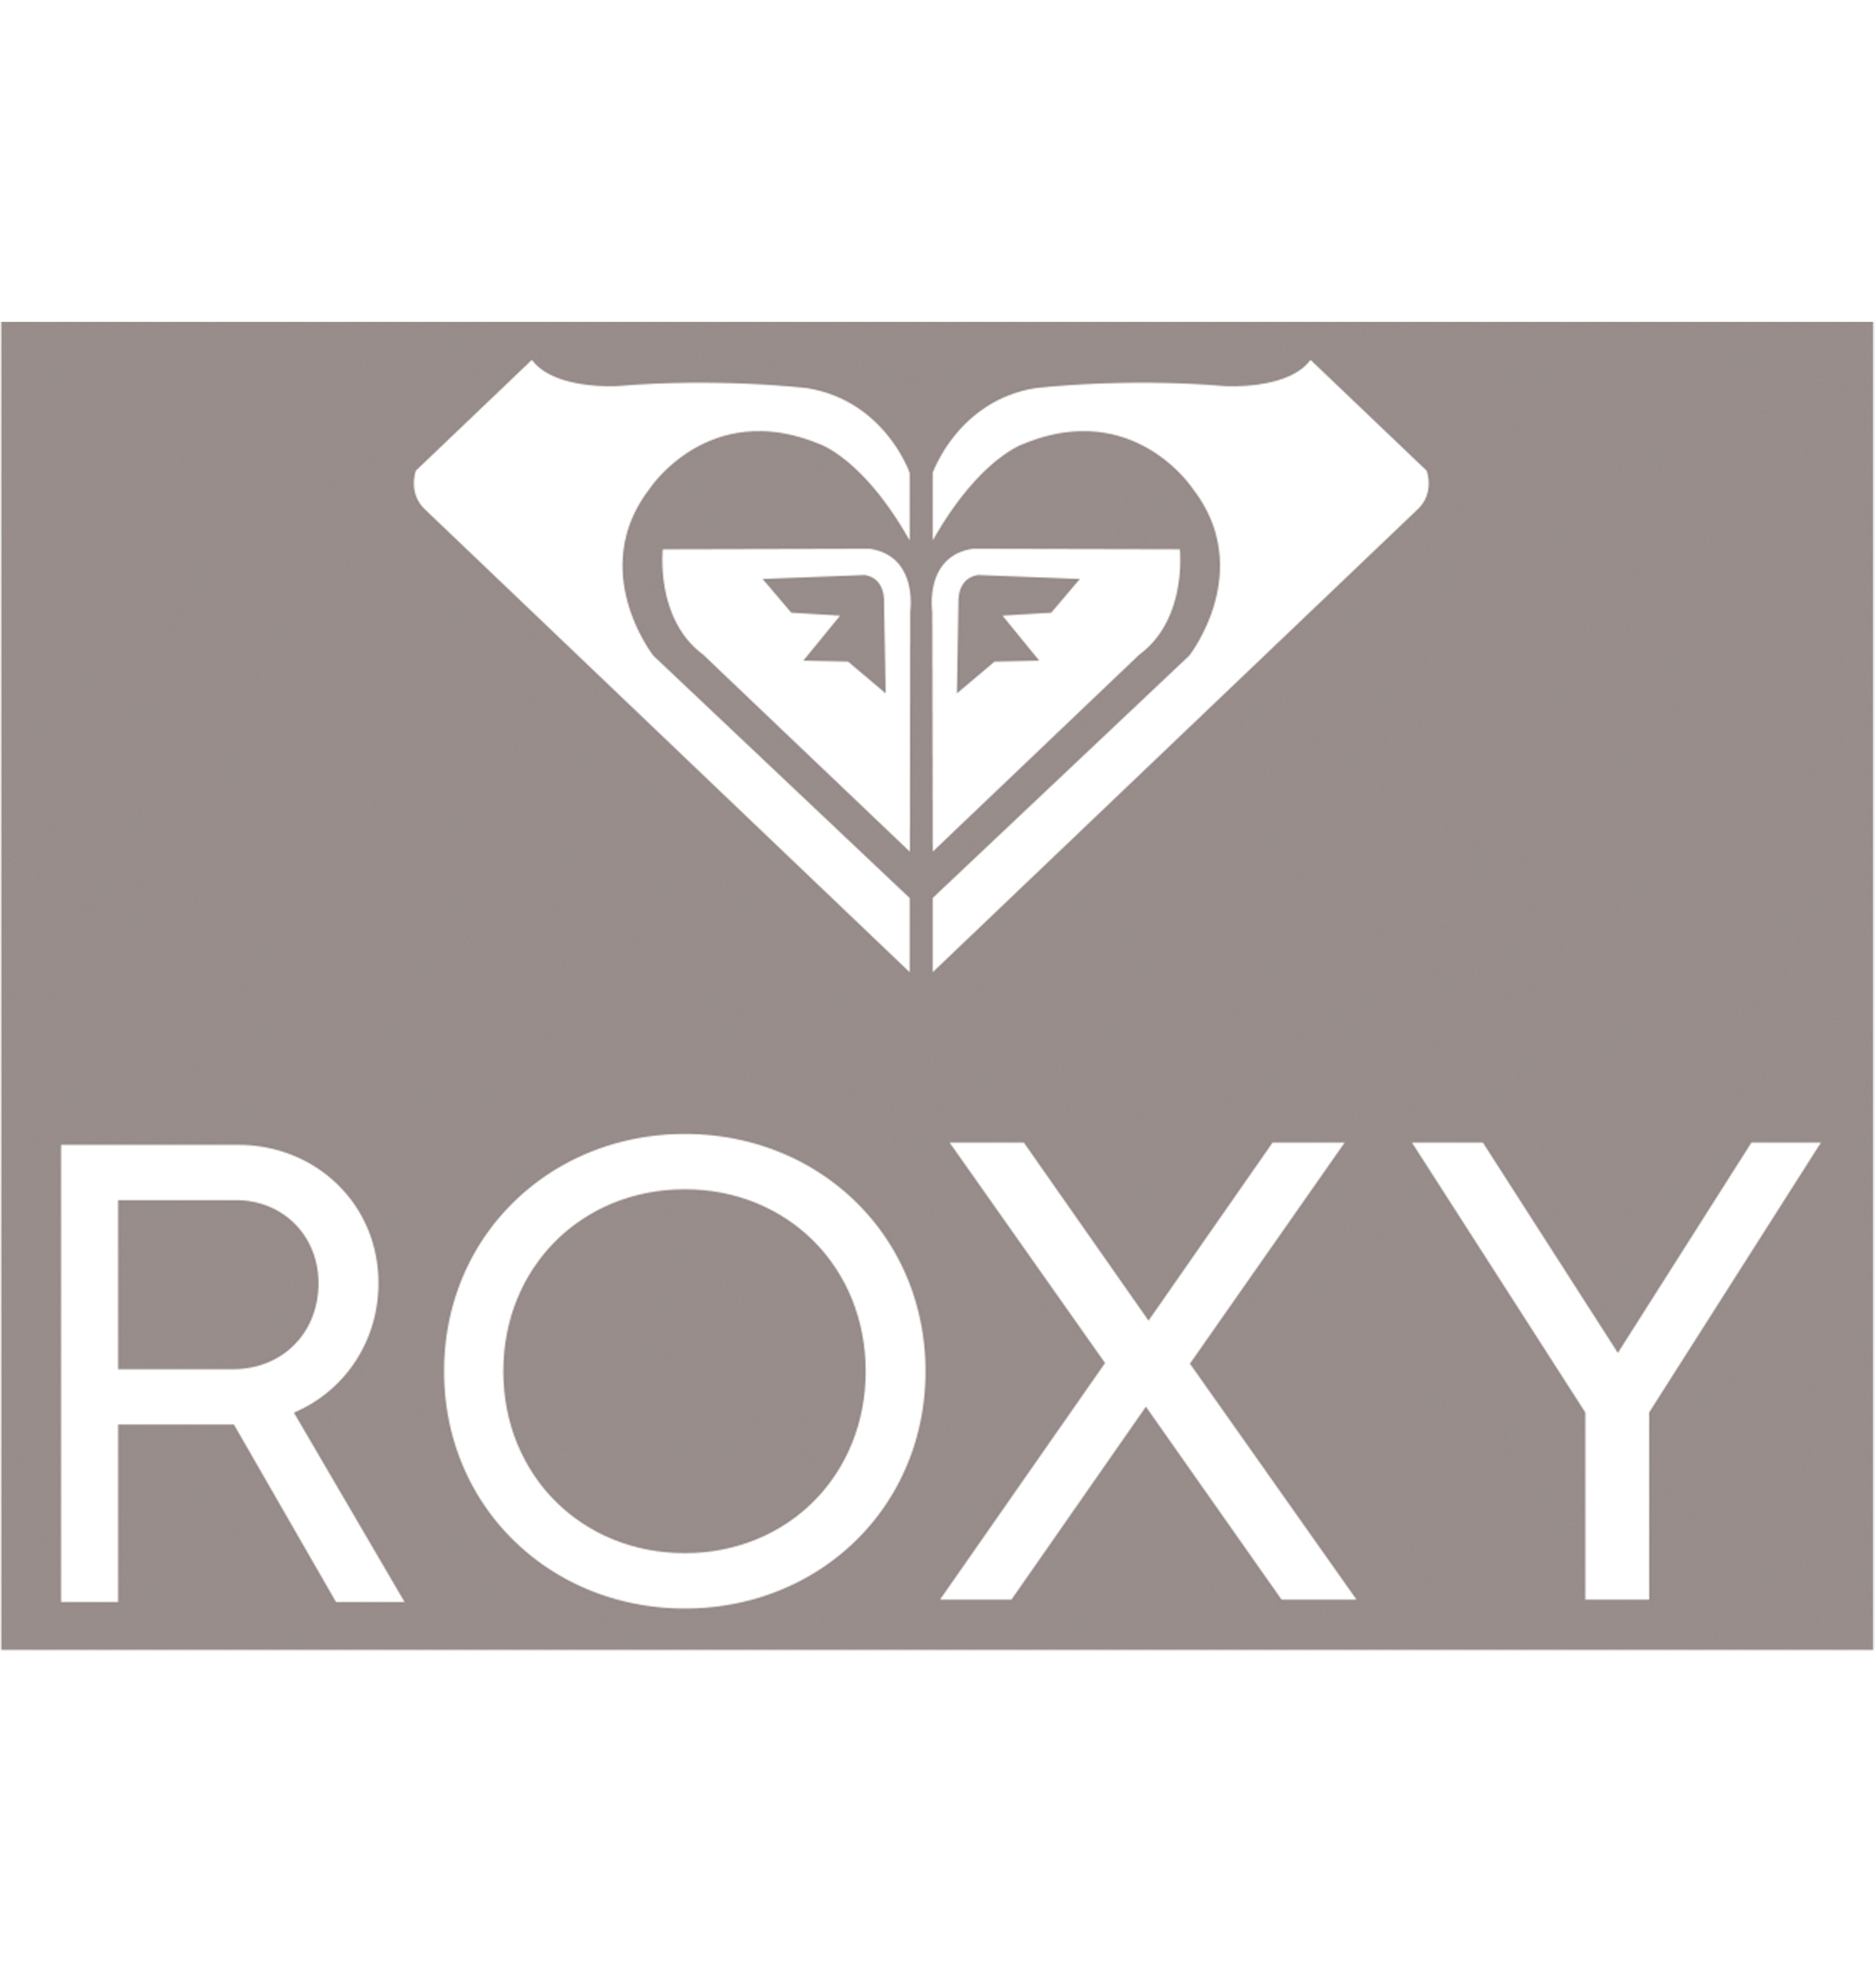 ROXY-A アクティブなROXYファンの目印になるブランドロゴステッカー